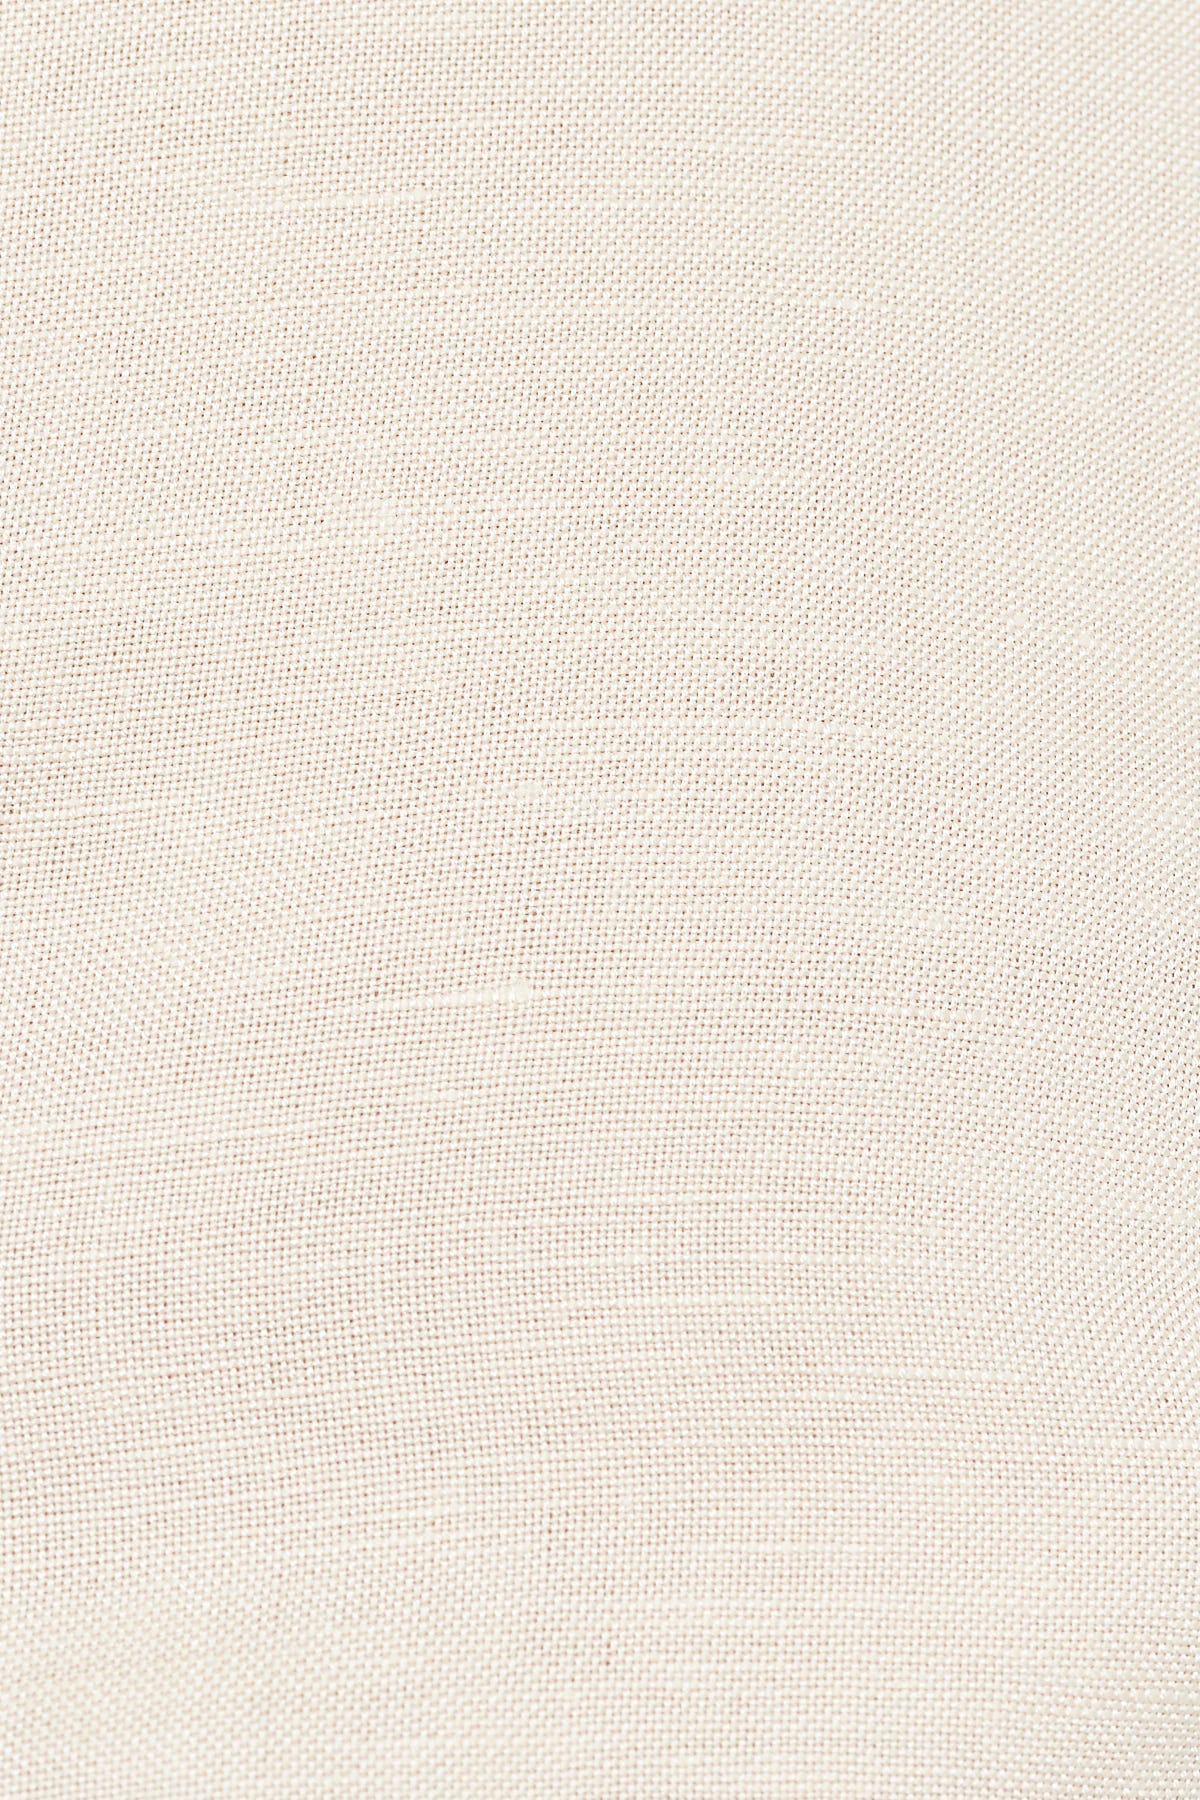 Lioness Alexandria Linen Crop Off White